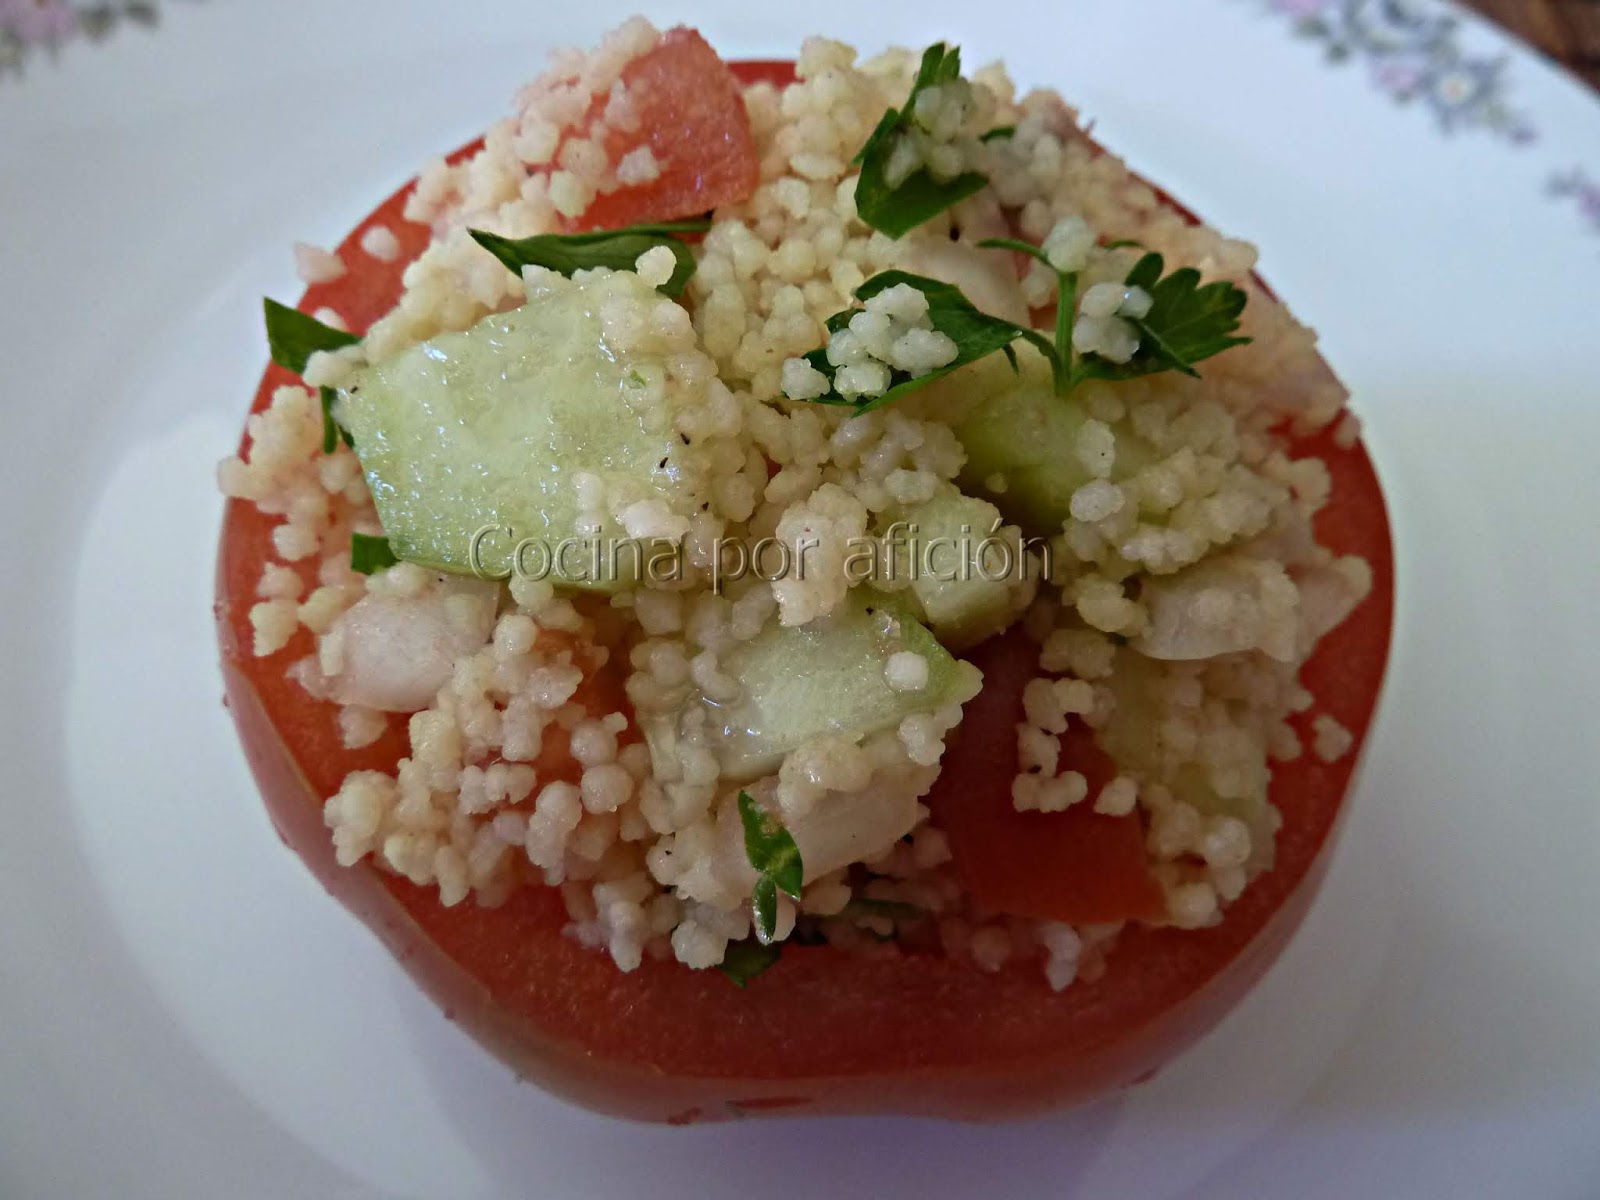 Cocina por afición: Tomates rellenos de cuscús con vegetales